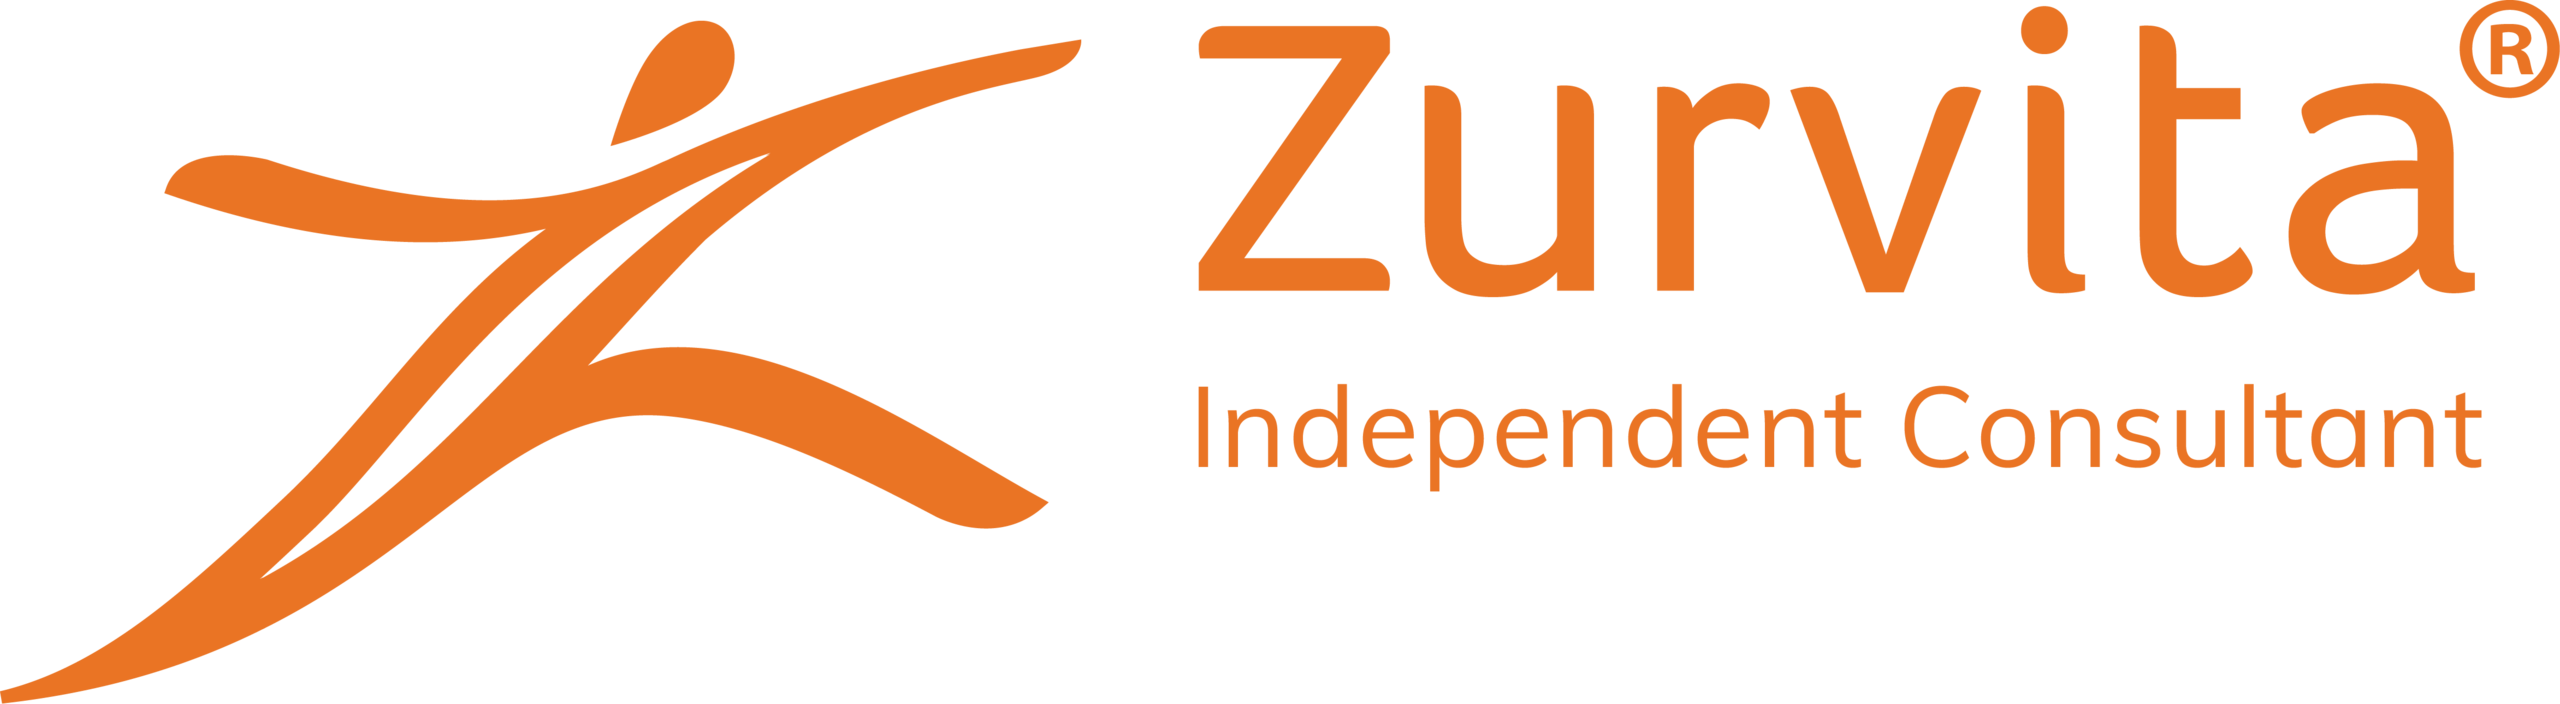 Zurvita Independent Consultant